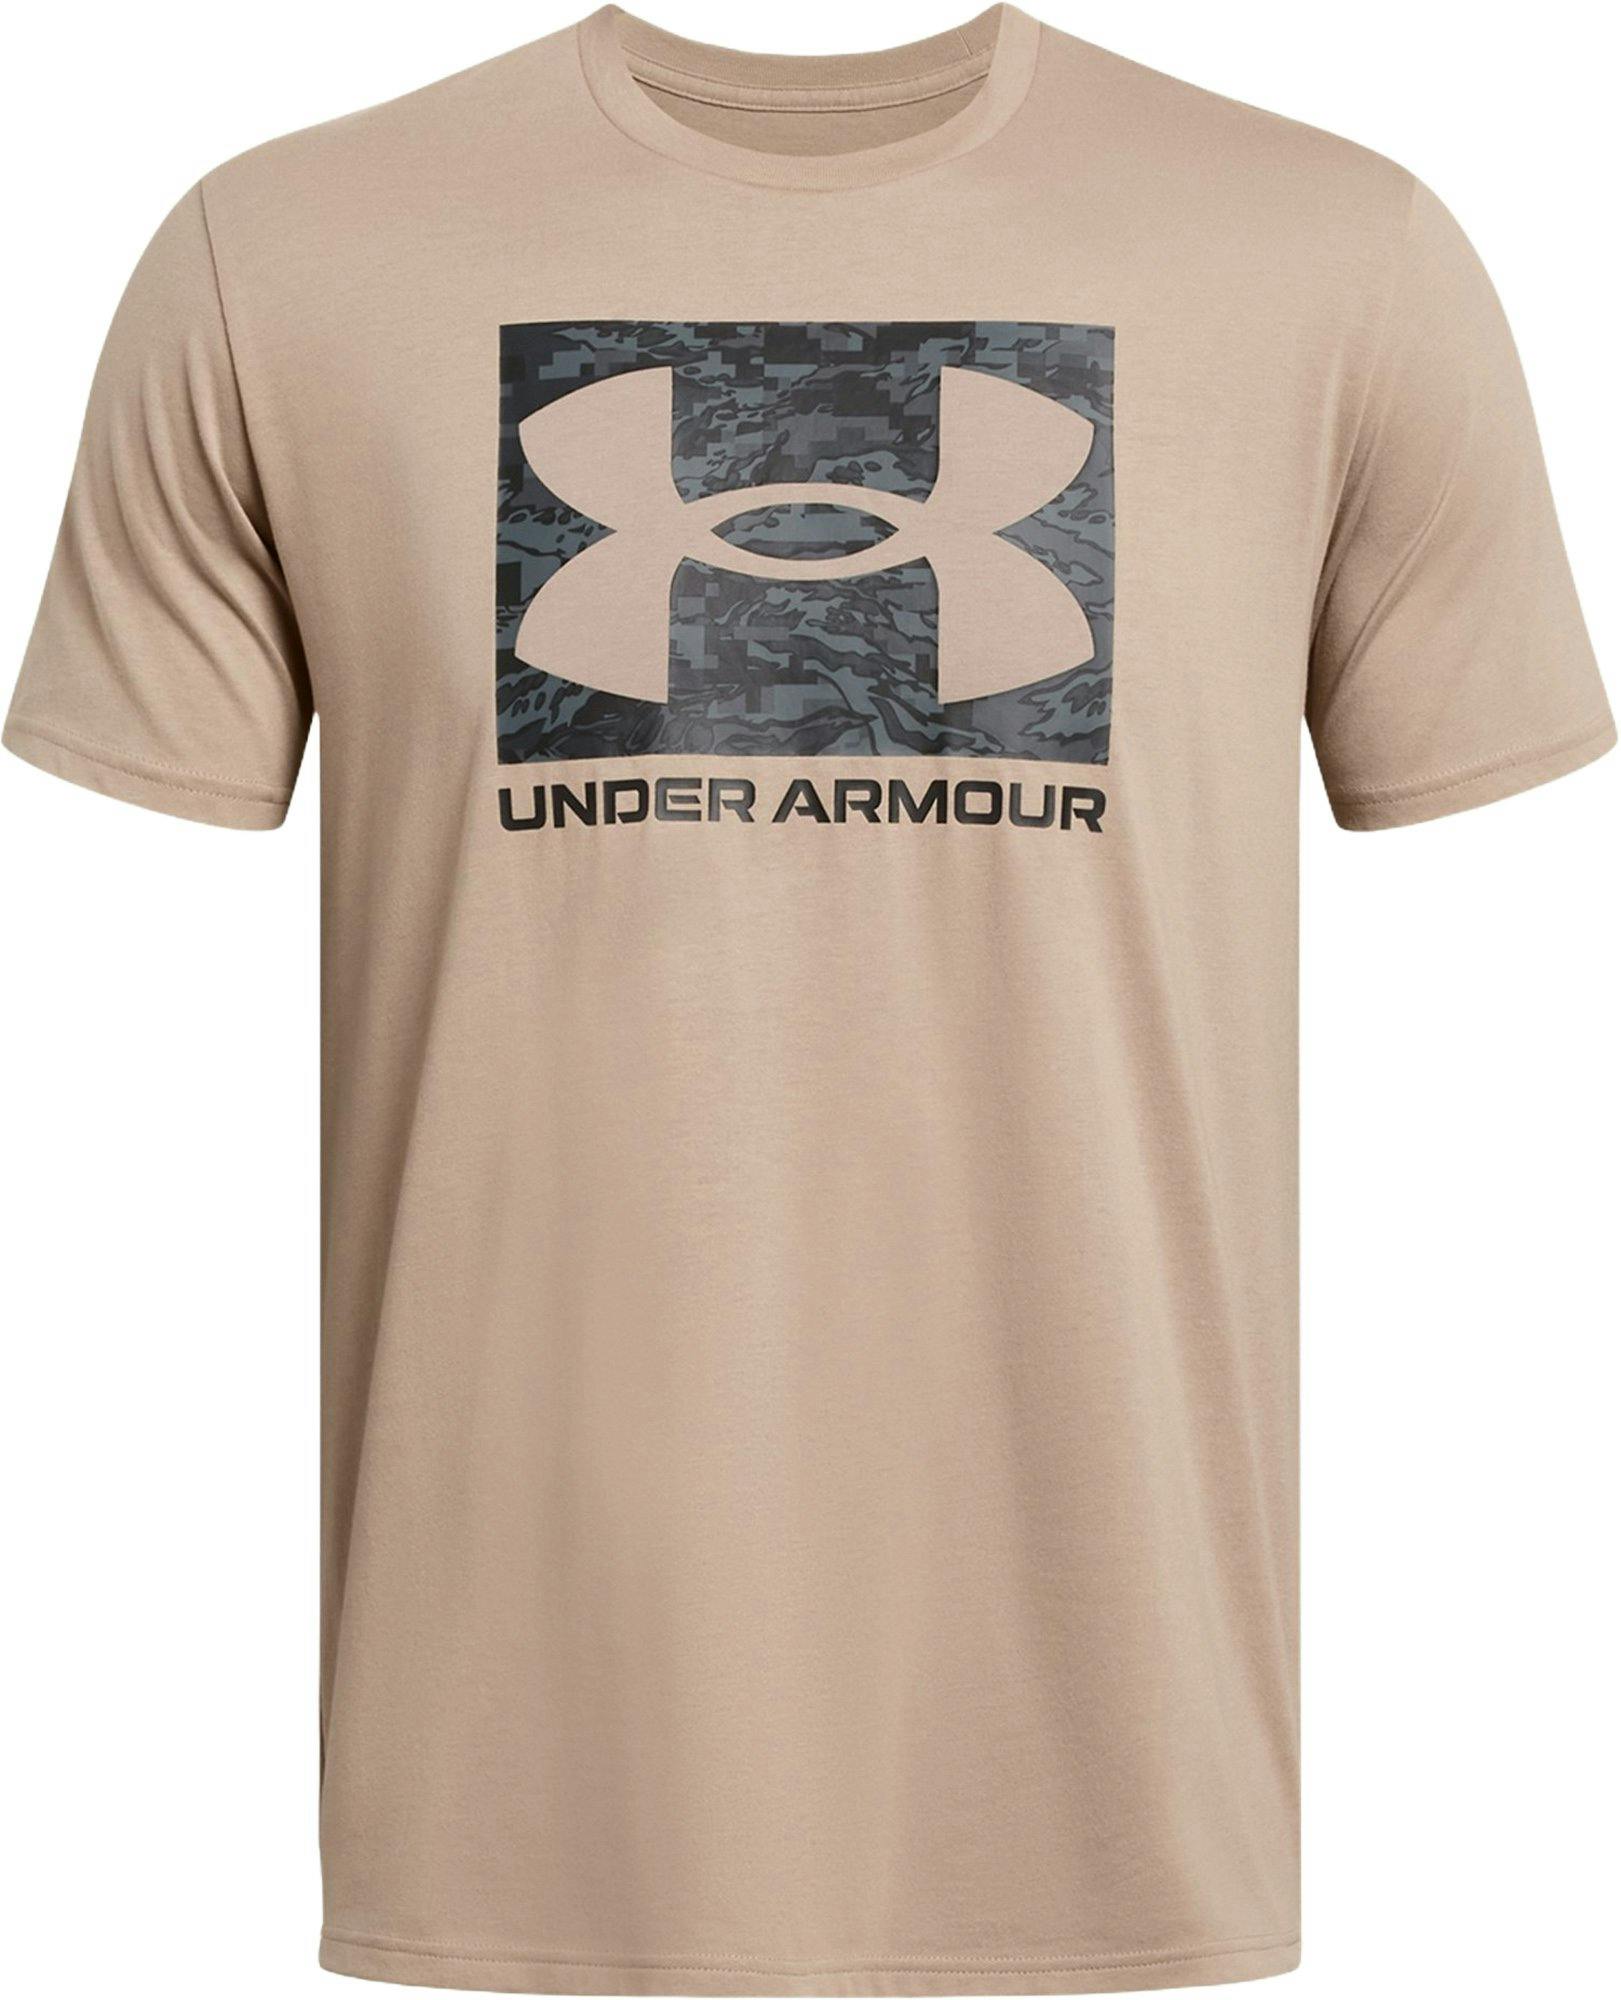 Product image for ABC Camo Boxed Logo Short Sleeve T-Shirt - Men's